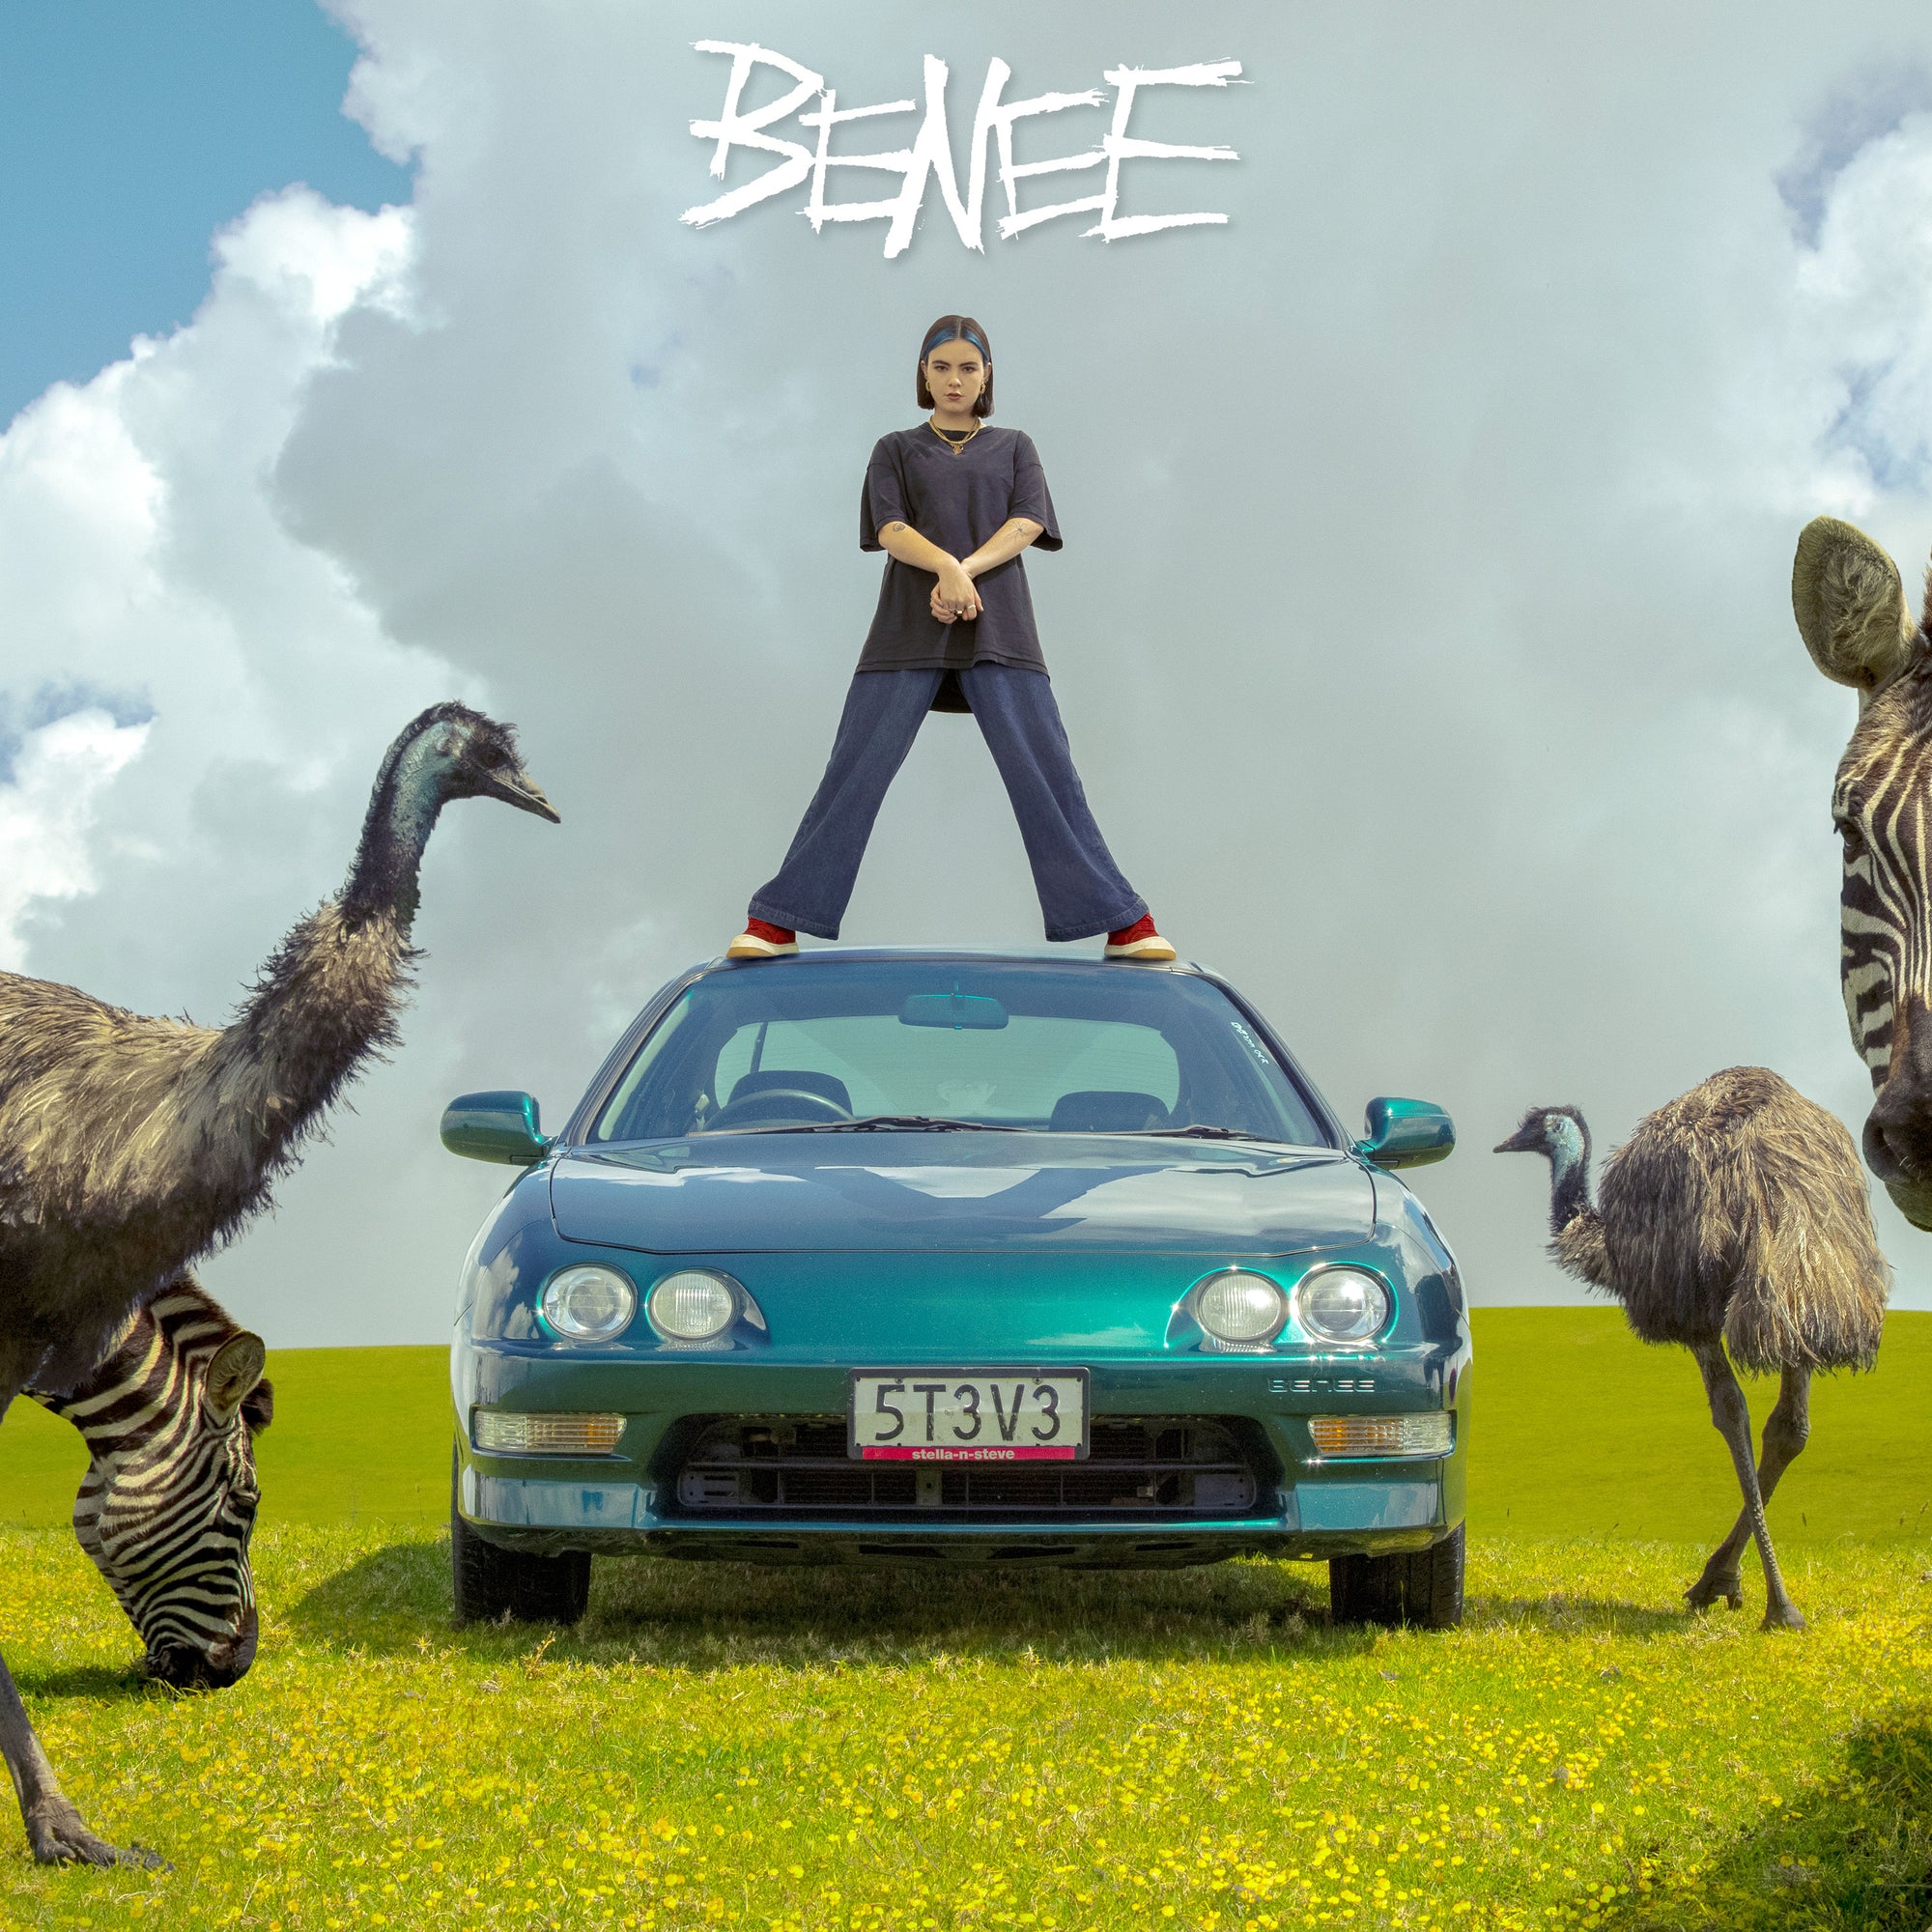 Benee CD cover